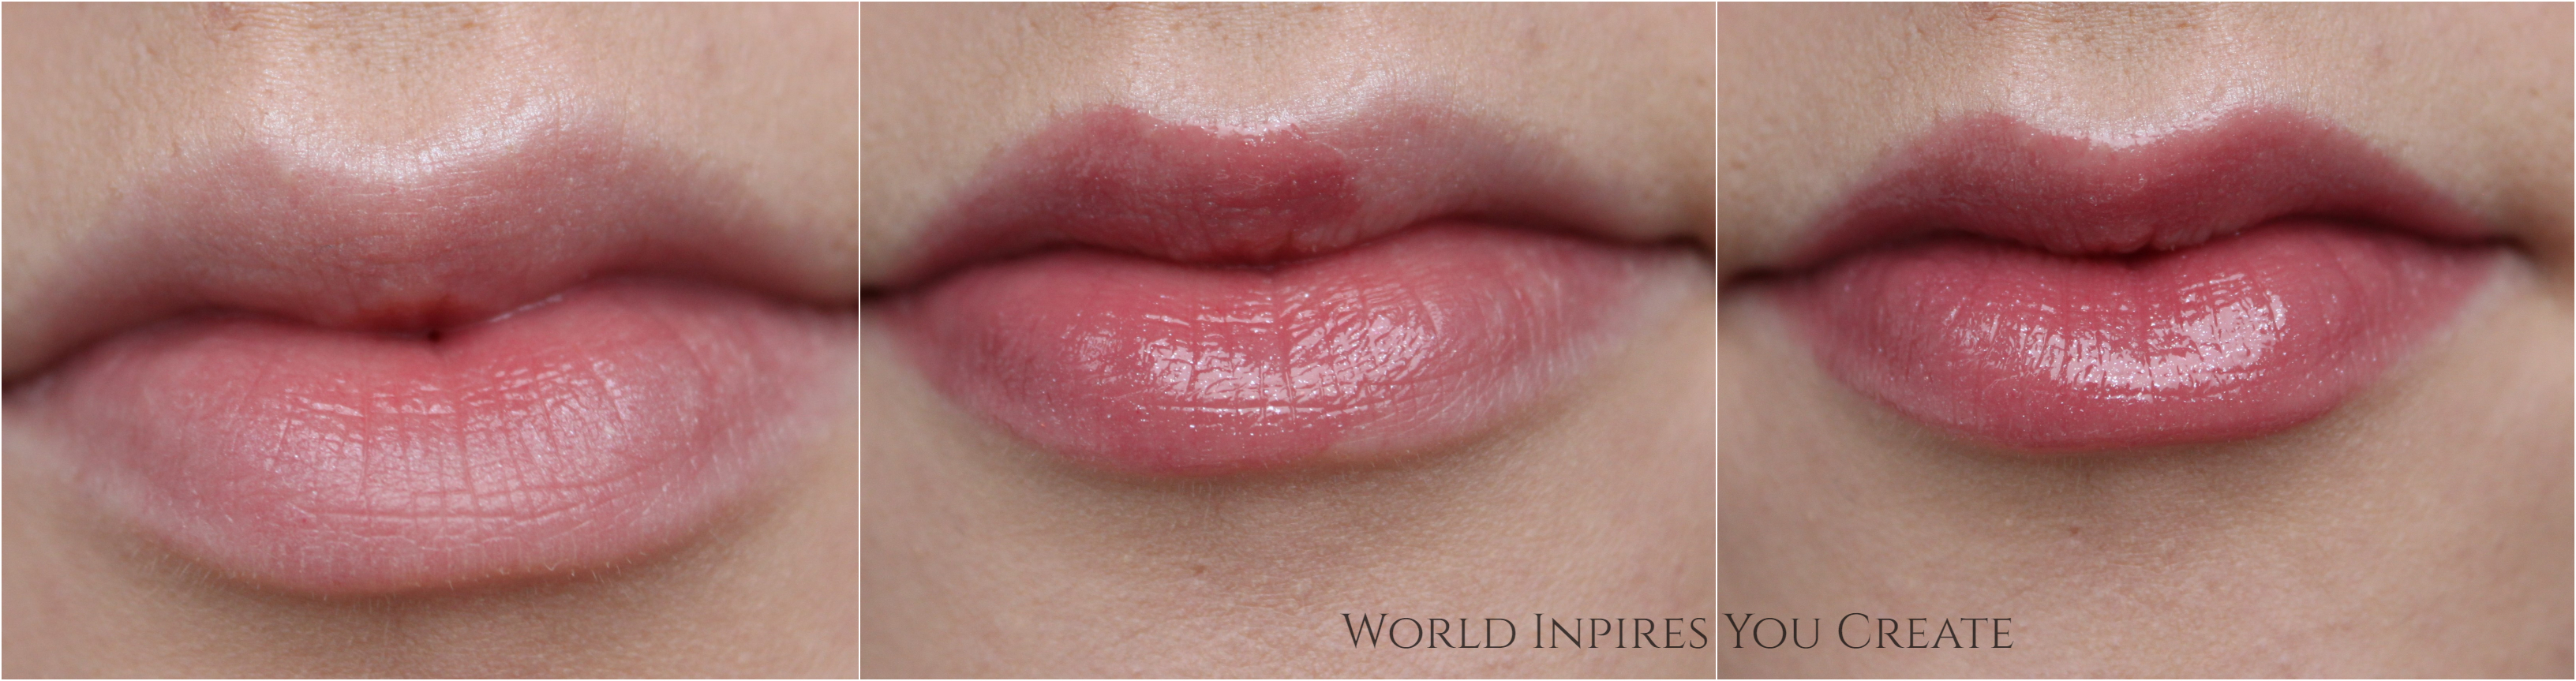 dior 785 lipstick